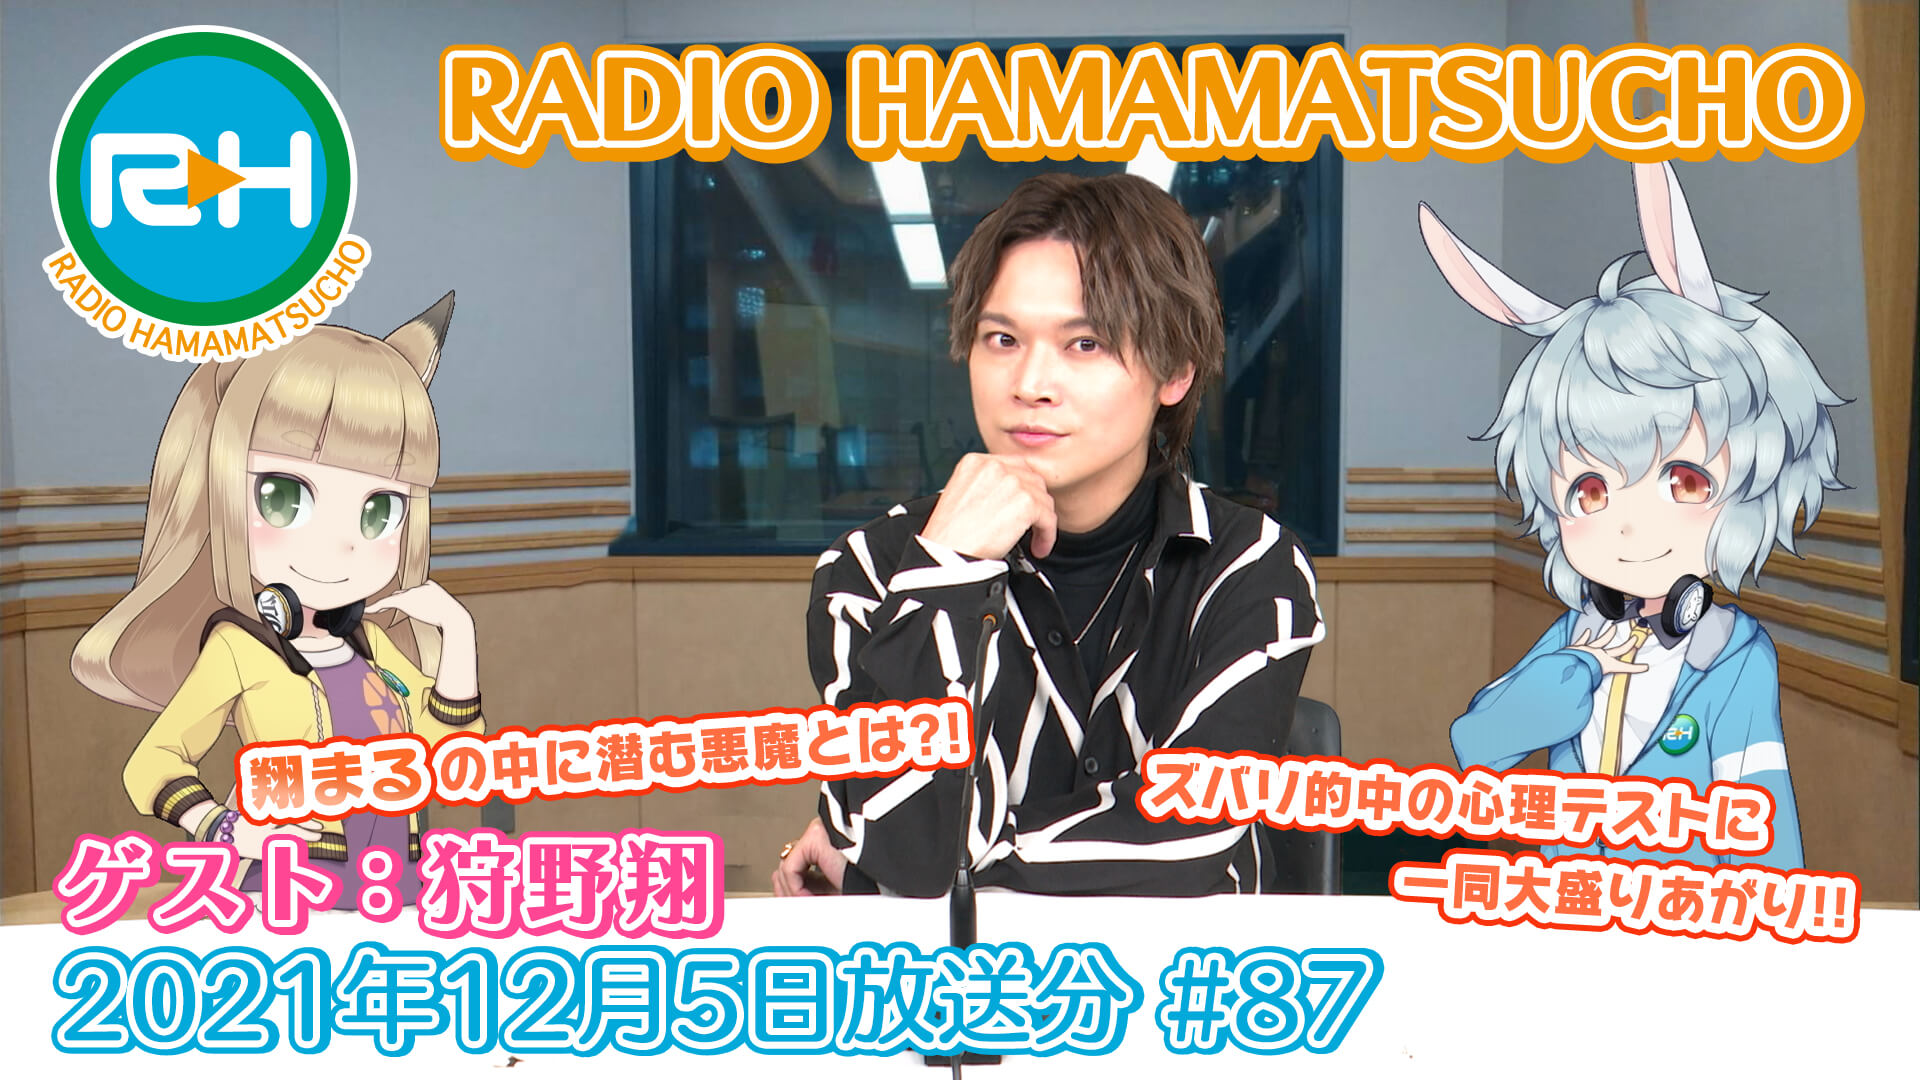 RADIO HAMAMATSUCHO 第87回 (2021年12月5日放送分) ゲスト: 狩野翔